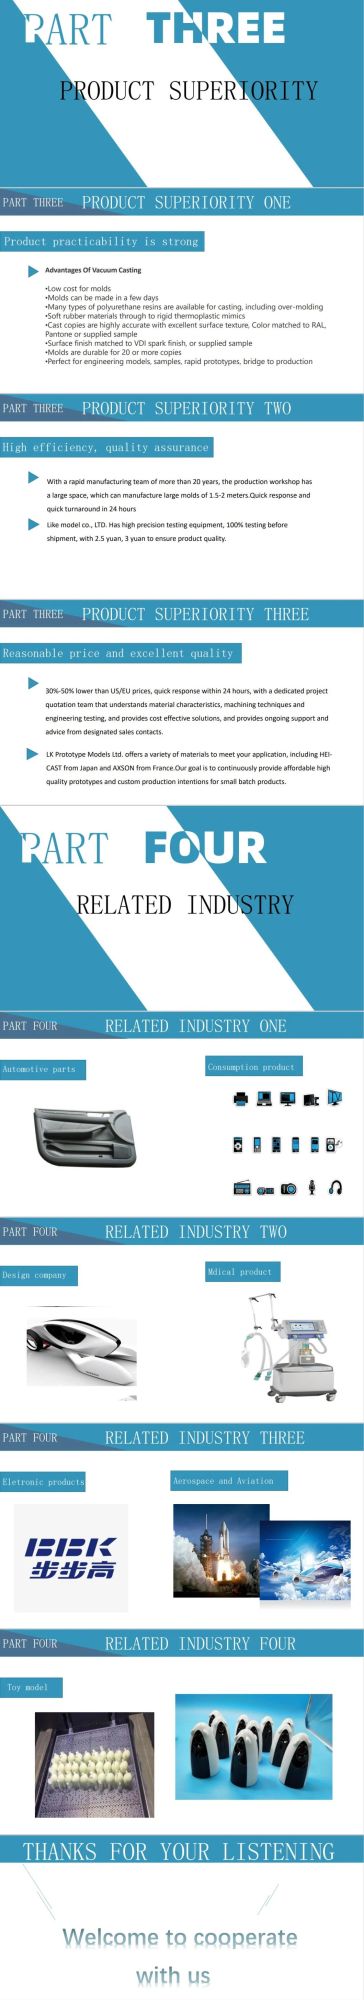 Custom Metal Machining Precision Aluminum Parts CNC Milling/Mechanical/Machining Parts